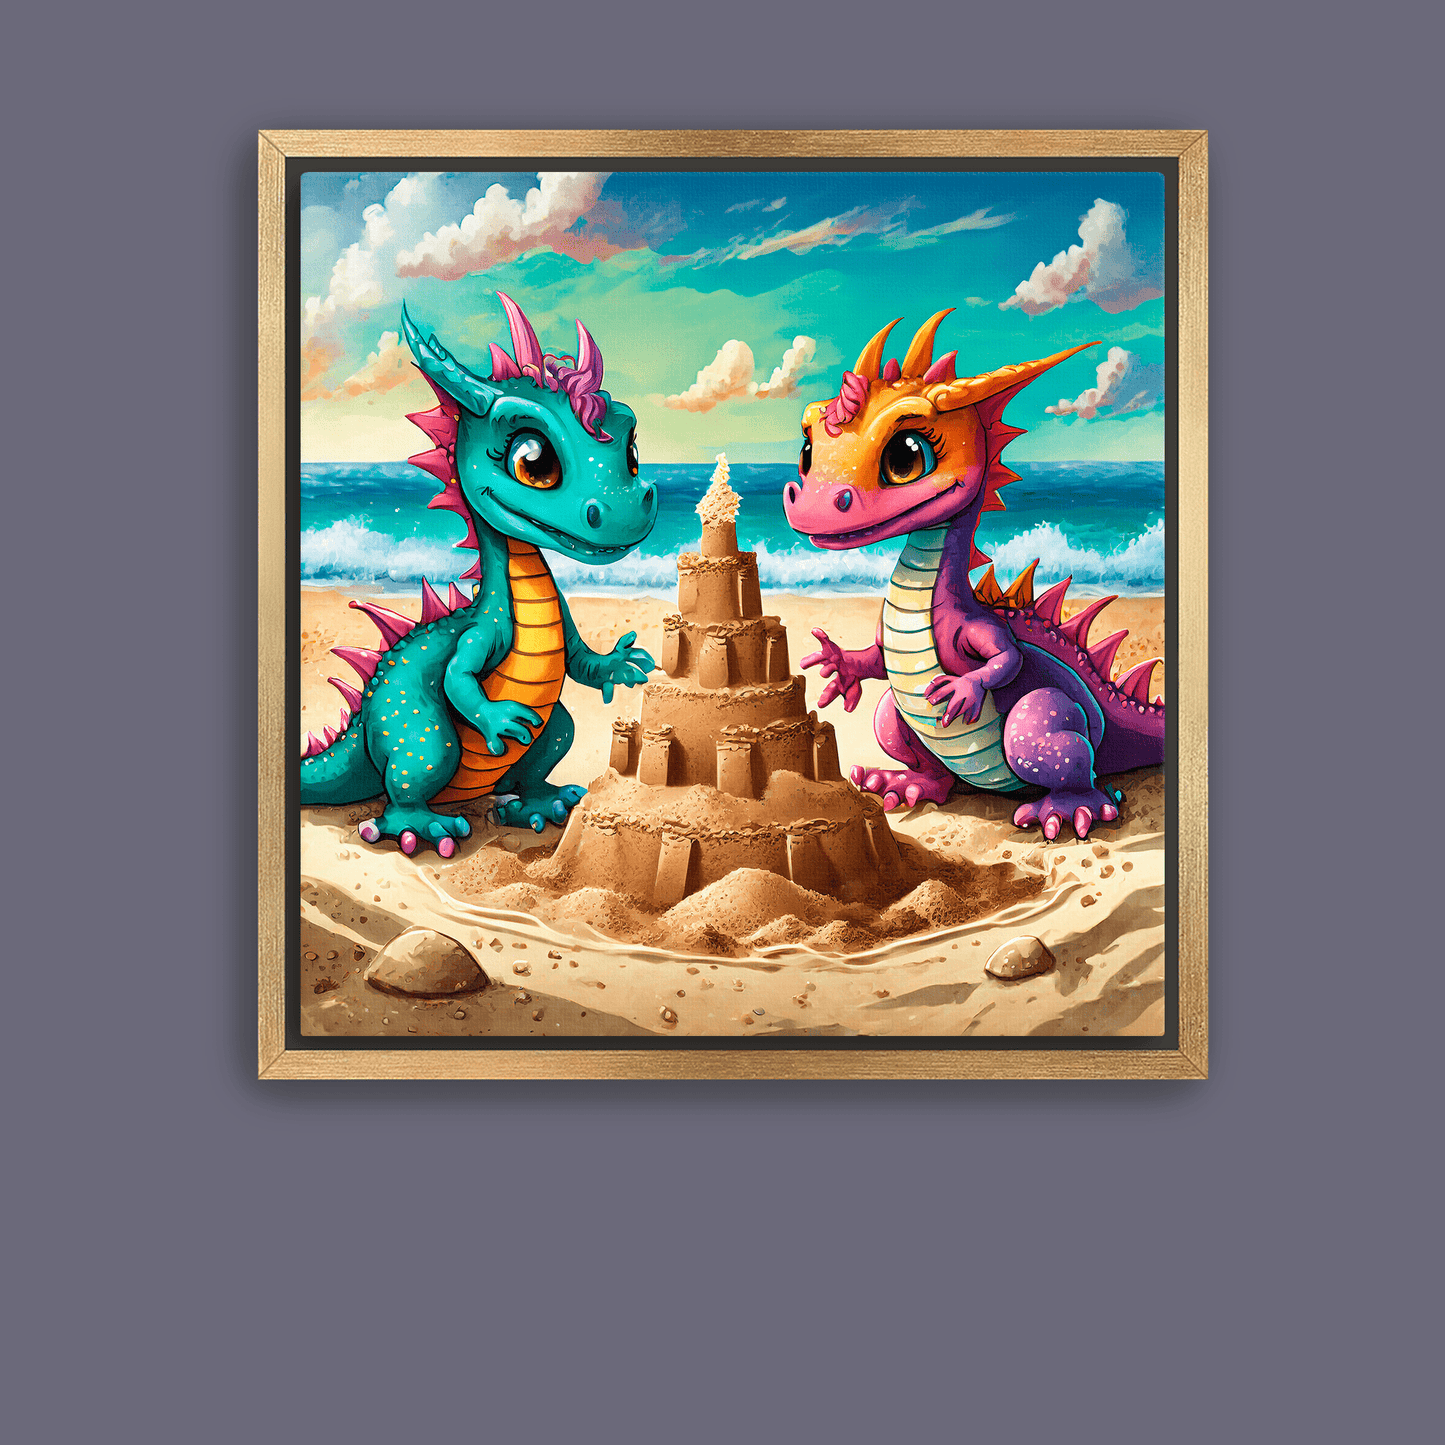 Baby Dragons at the Beach - Canvas Wrap - Premium Canvas Print